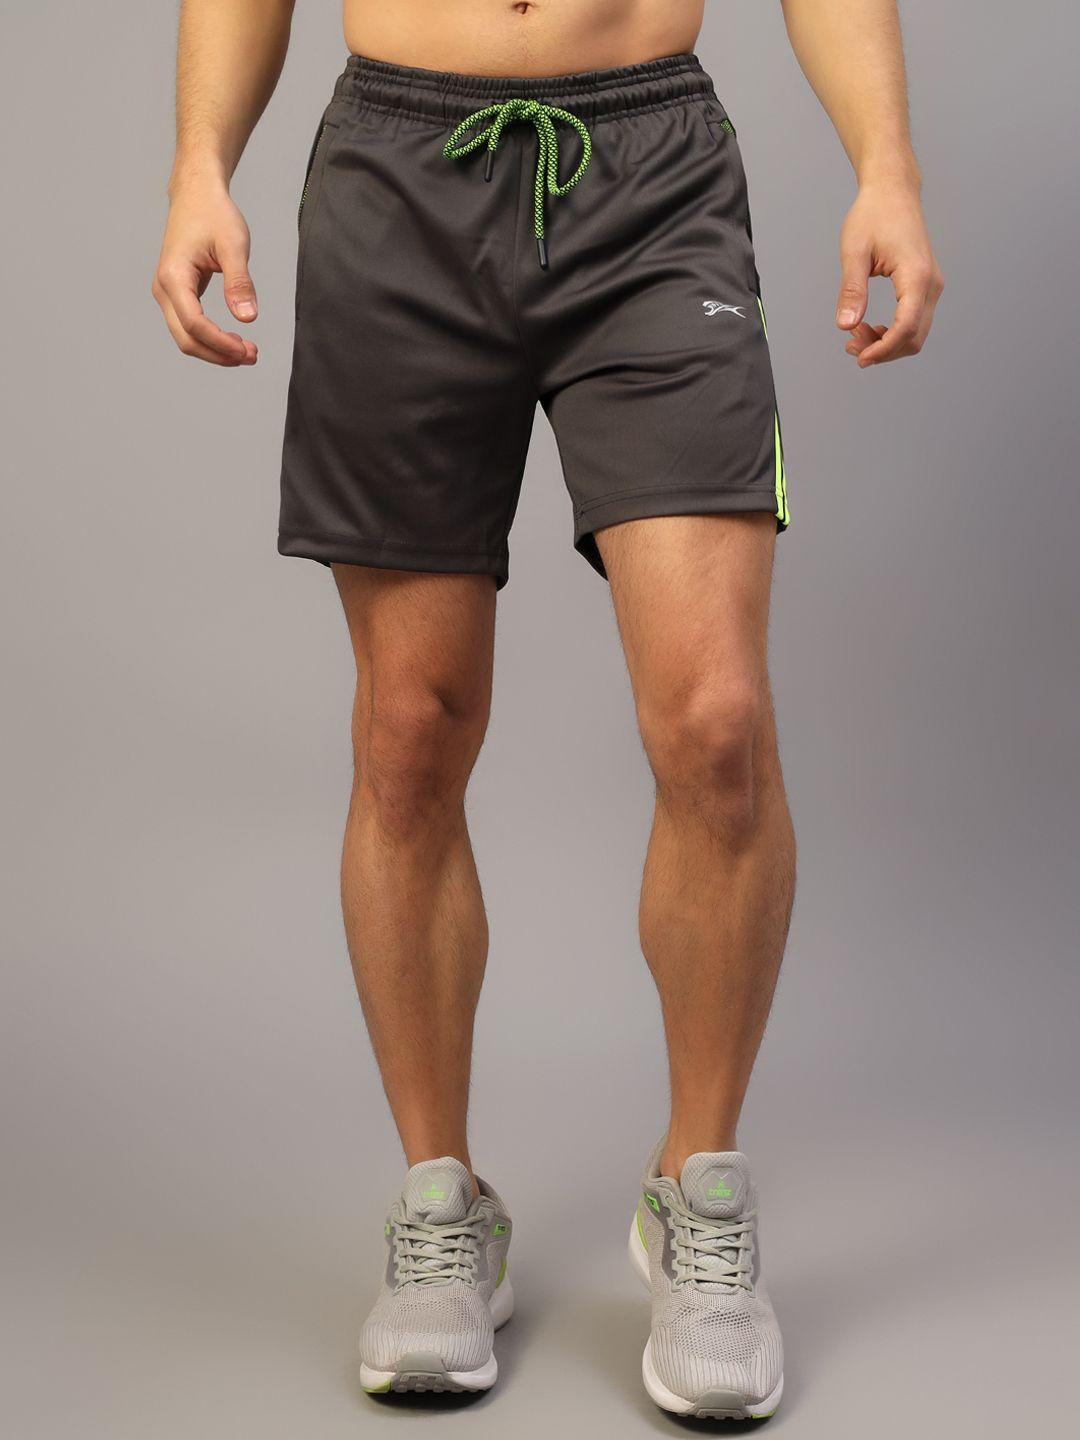 shiv-naresh-men-shorts